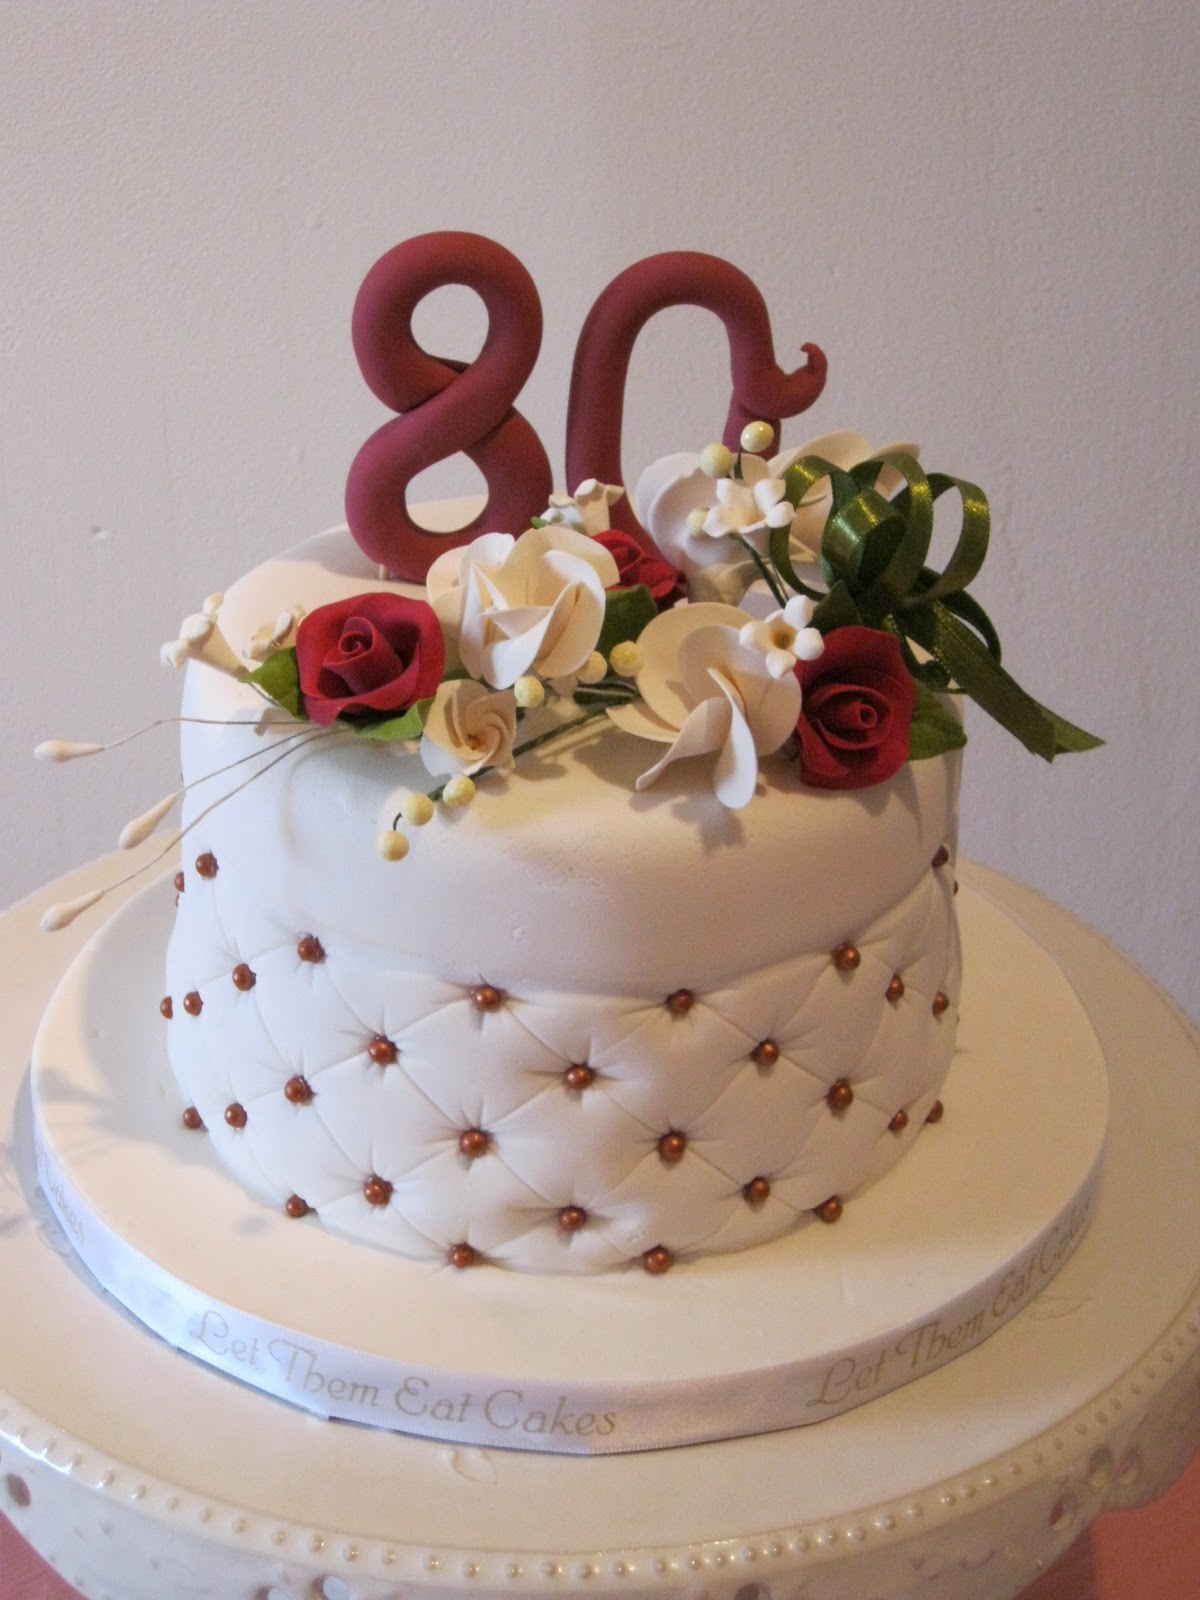 Let Them Eat Cakes: 80th Birthday